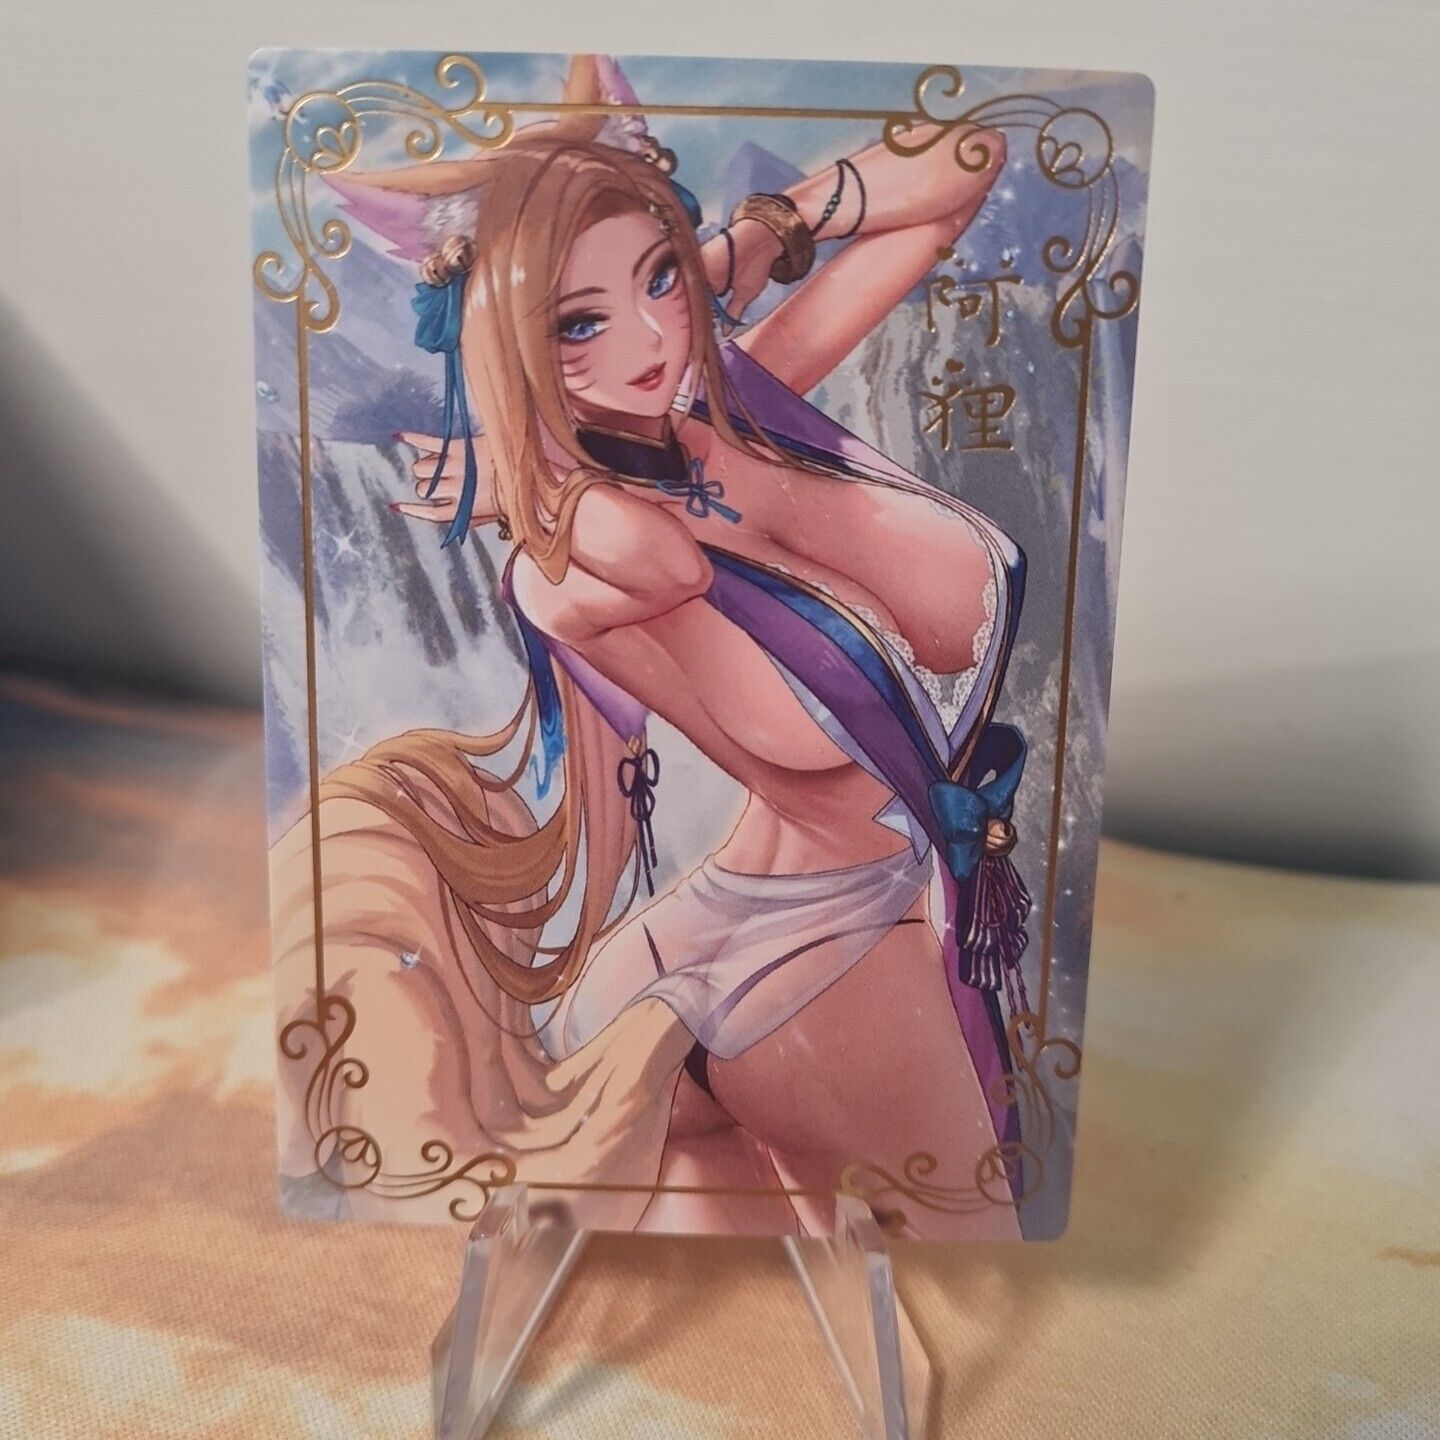 WAIFU ANIME GIRL - TCG Card Game - Sexy Girl Bikini Ecchi - Rare Holo Foil Mint 